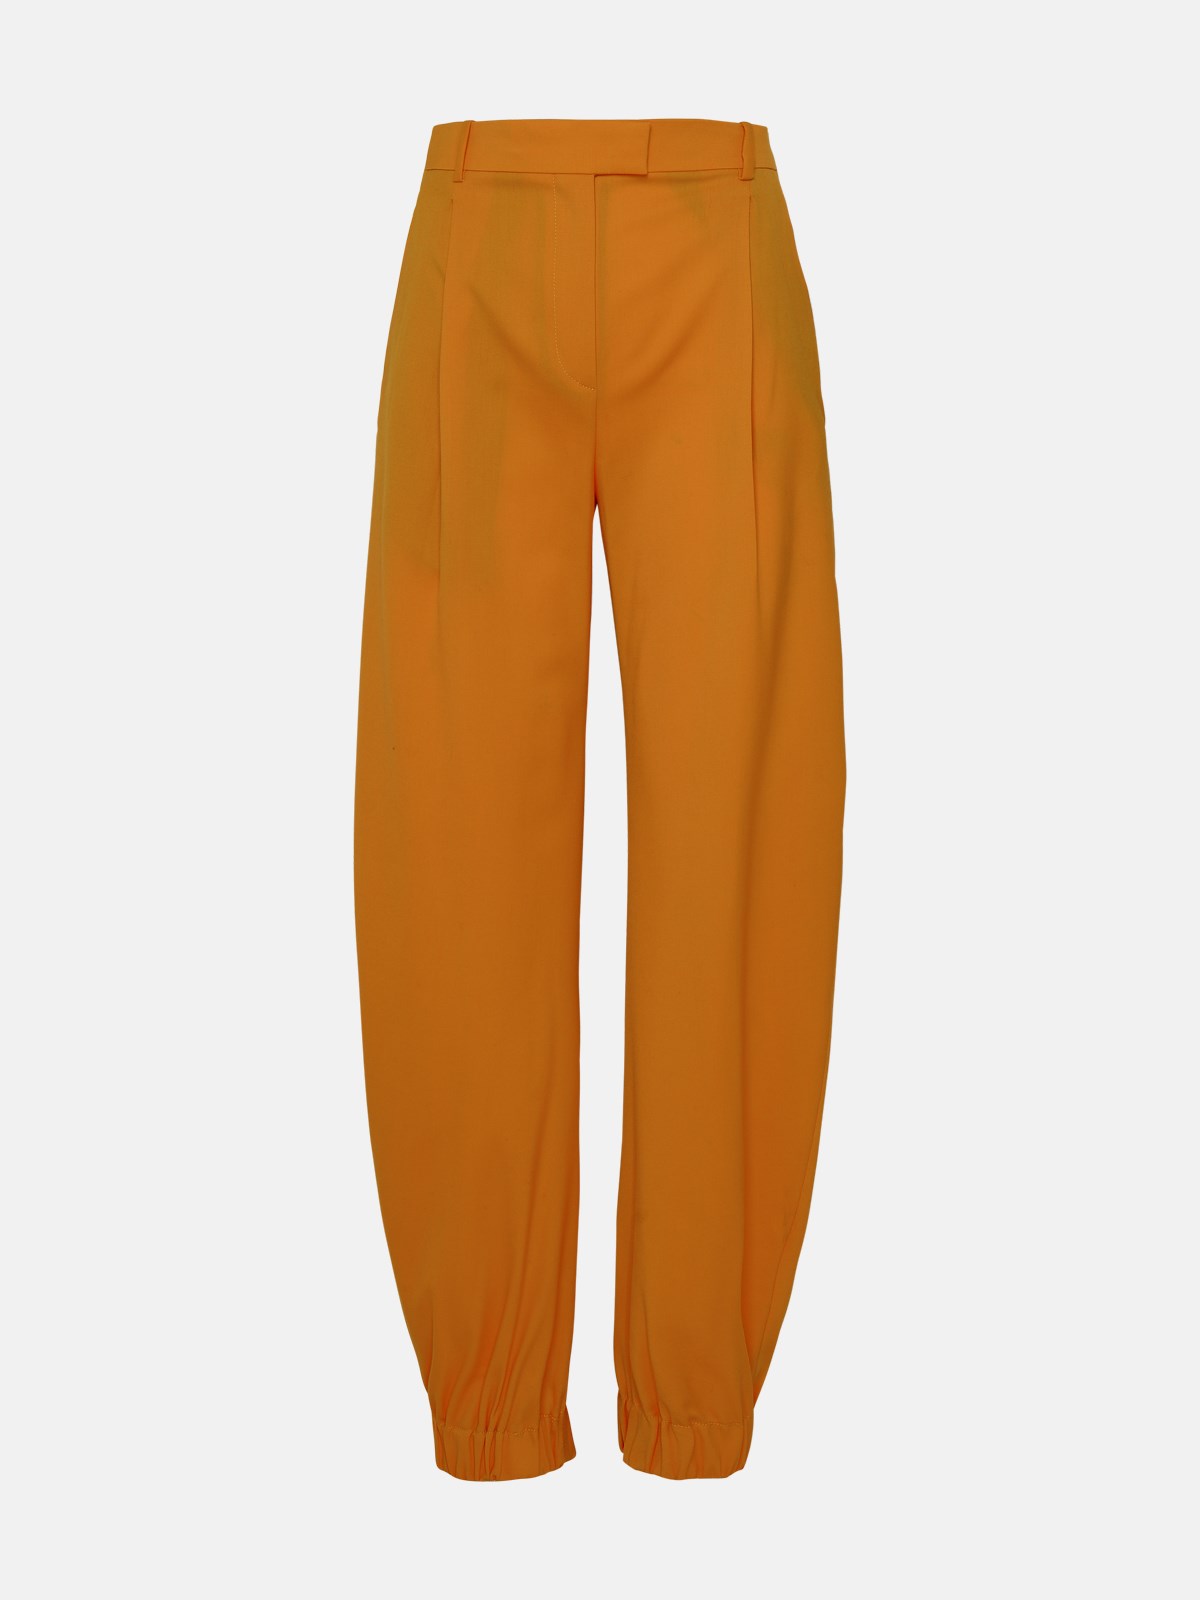 Attico Orange Wool Blend Rey Pants